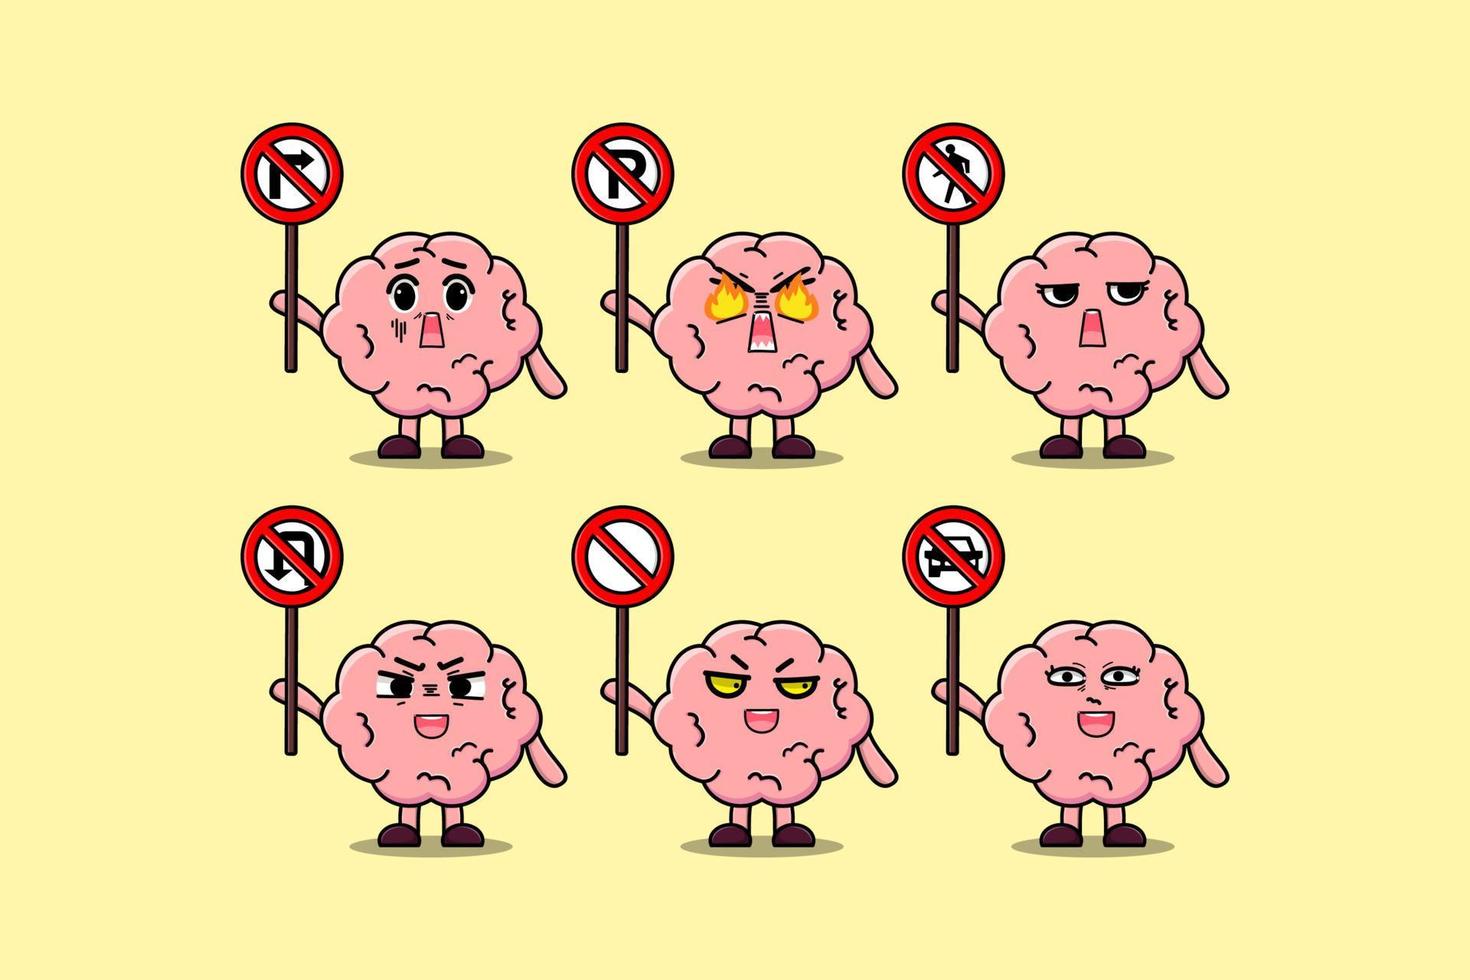 Cute Brain cartoon character holding traffic sign vector